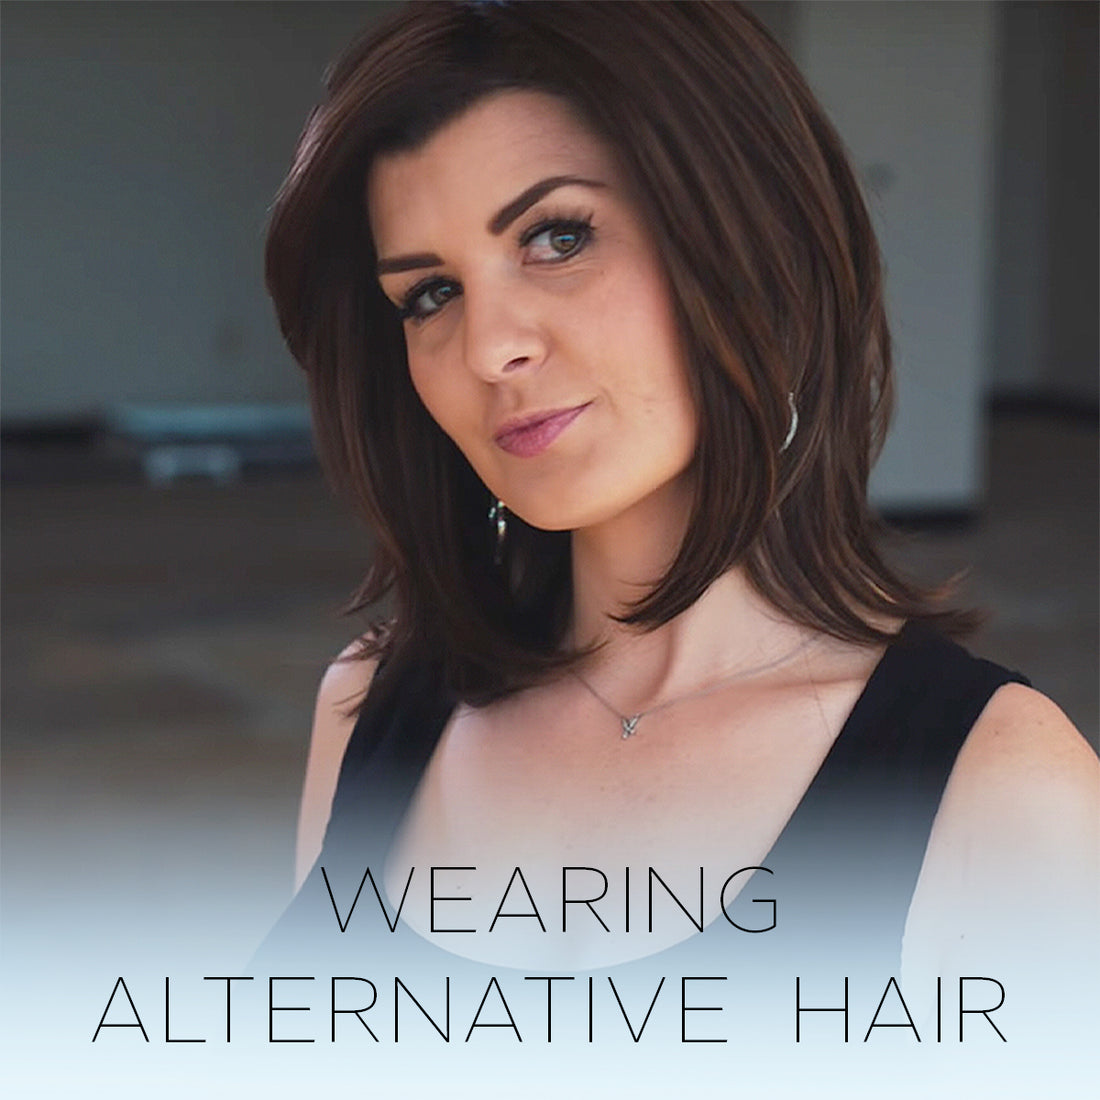 The Truth Behind Wearing Alternative Hair